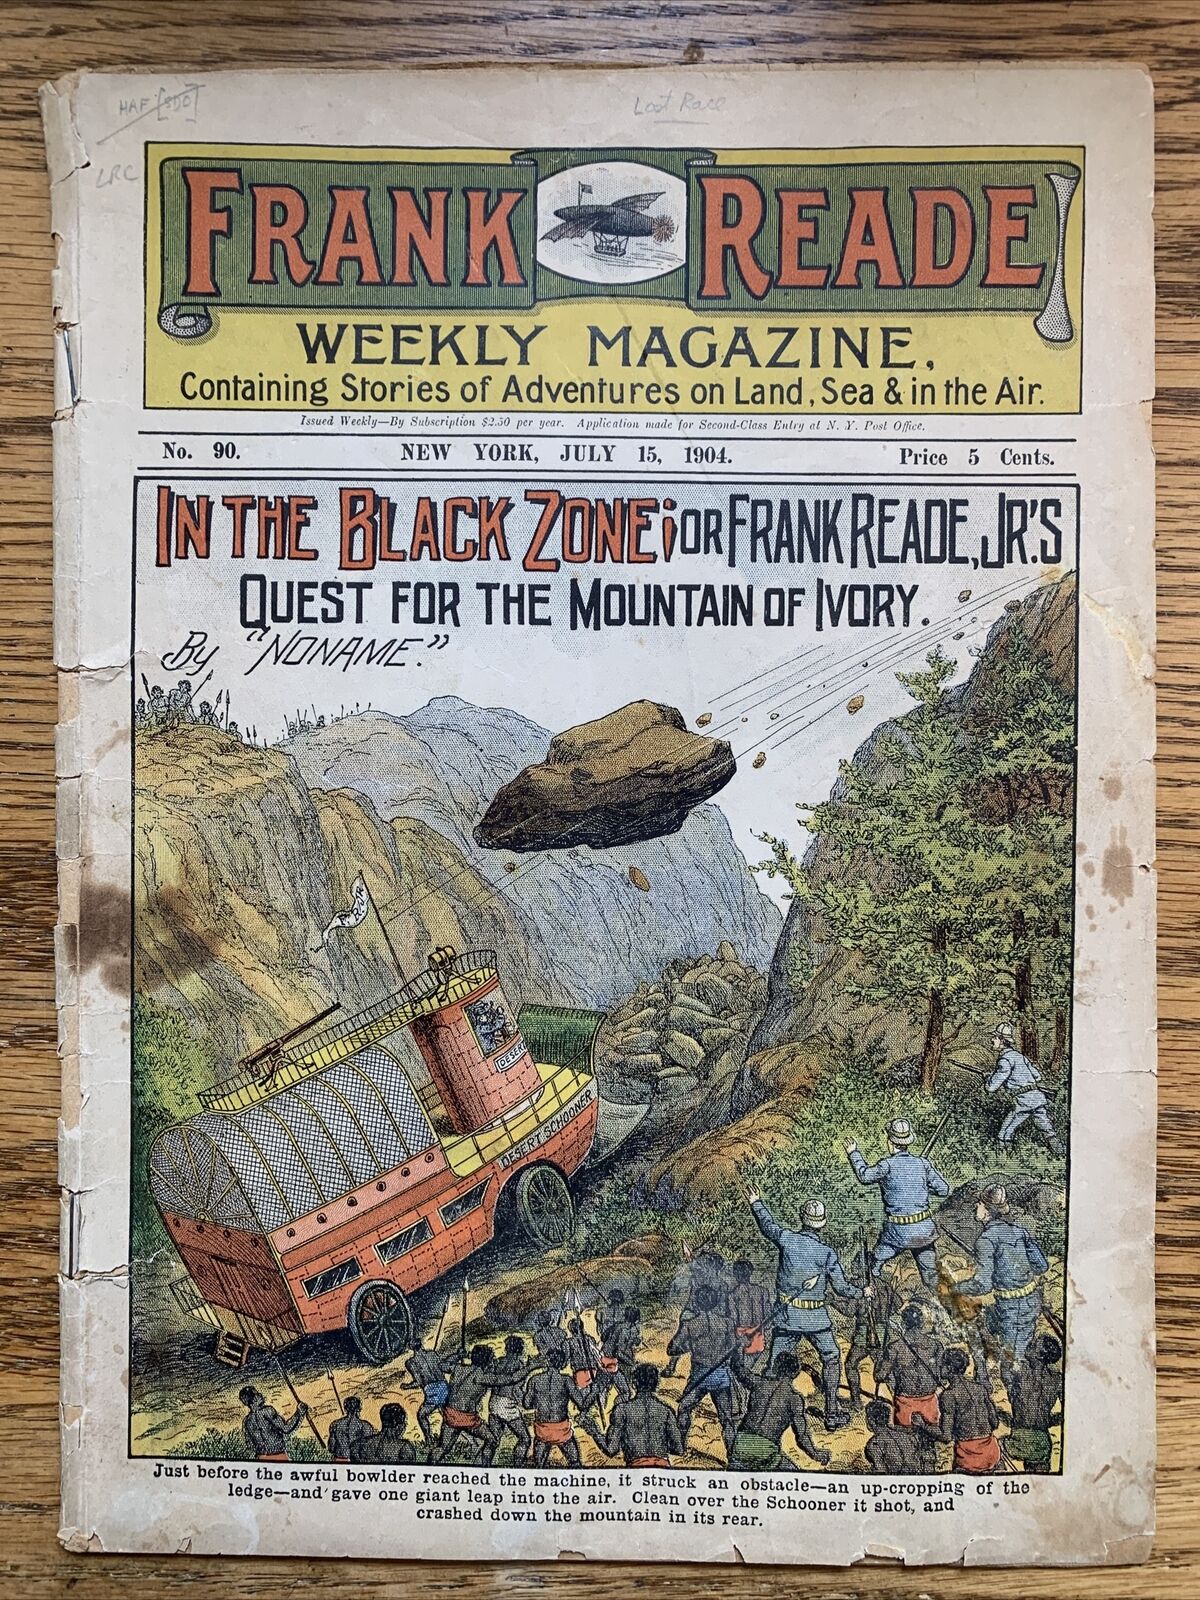 FRANK READE WEEKLY MAGAZINE #90 July 3 1903 - In The Black ZoneDime Novel Weekly